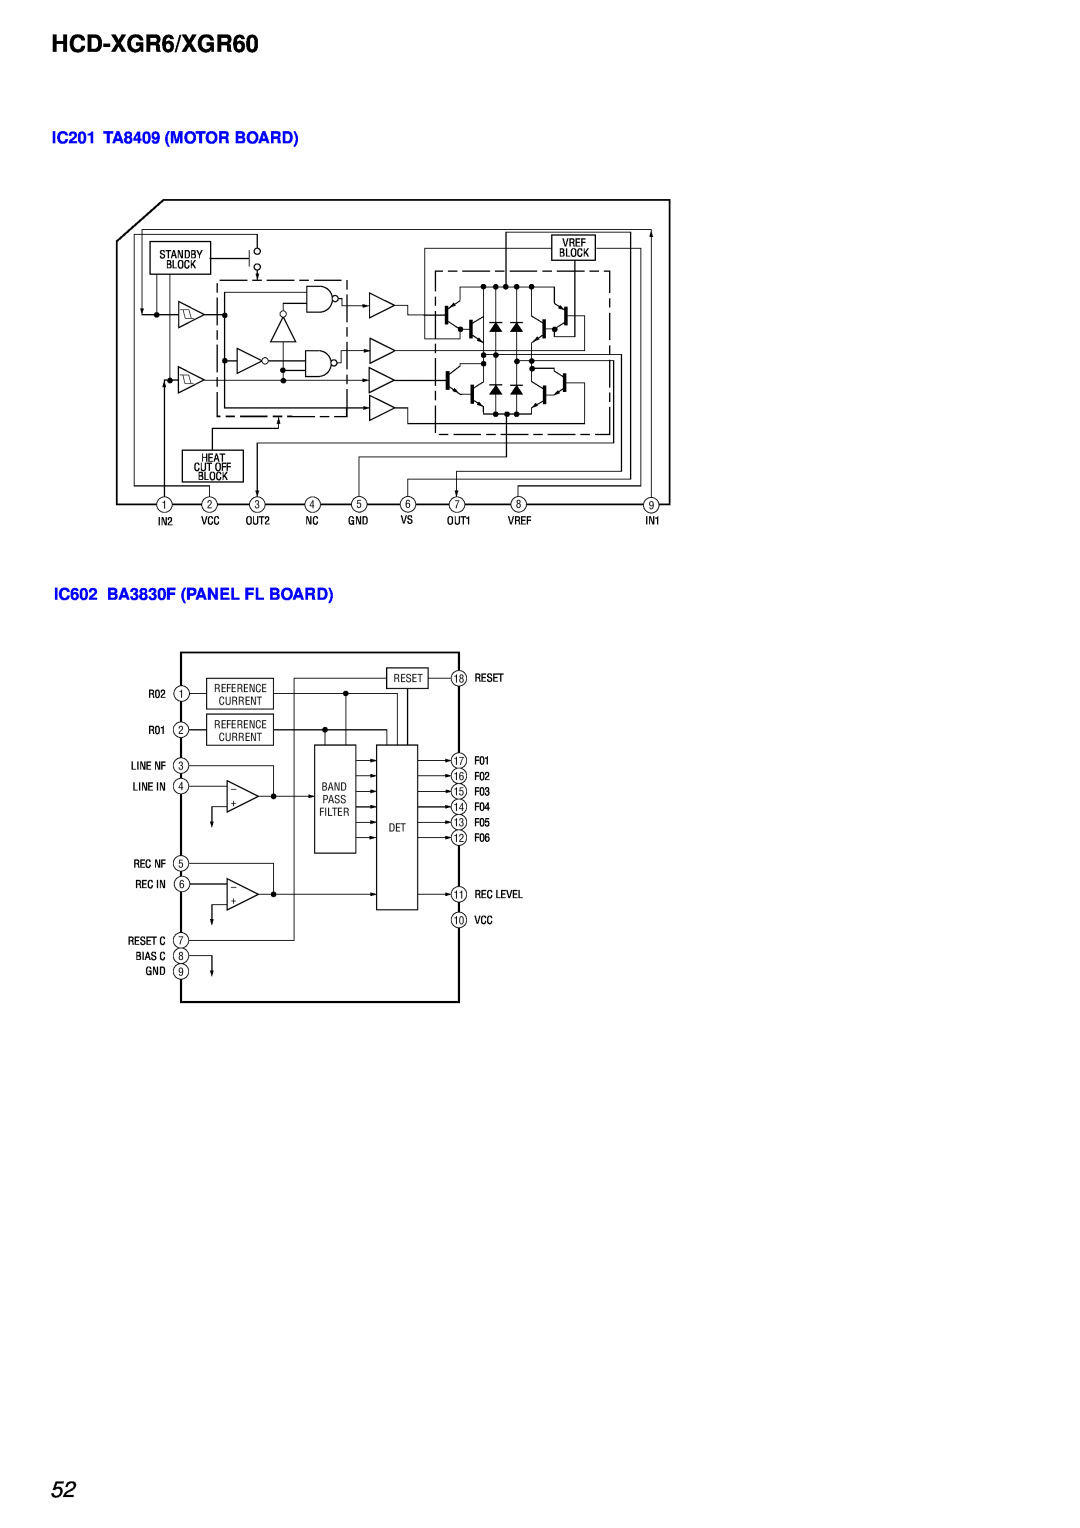 Sony HCD-XGR60 specifications HCD-XGR6/XGR60, IC201 TA8409 MOTOR BOARD, IC602 BA3830F PANEL FL BOARD, Line Nf, Rec Nf 